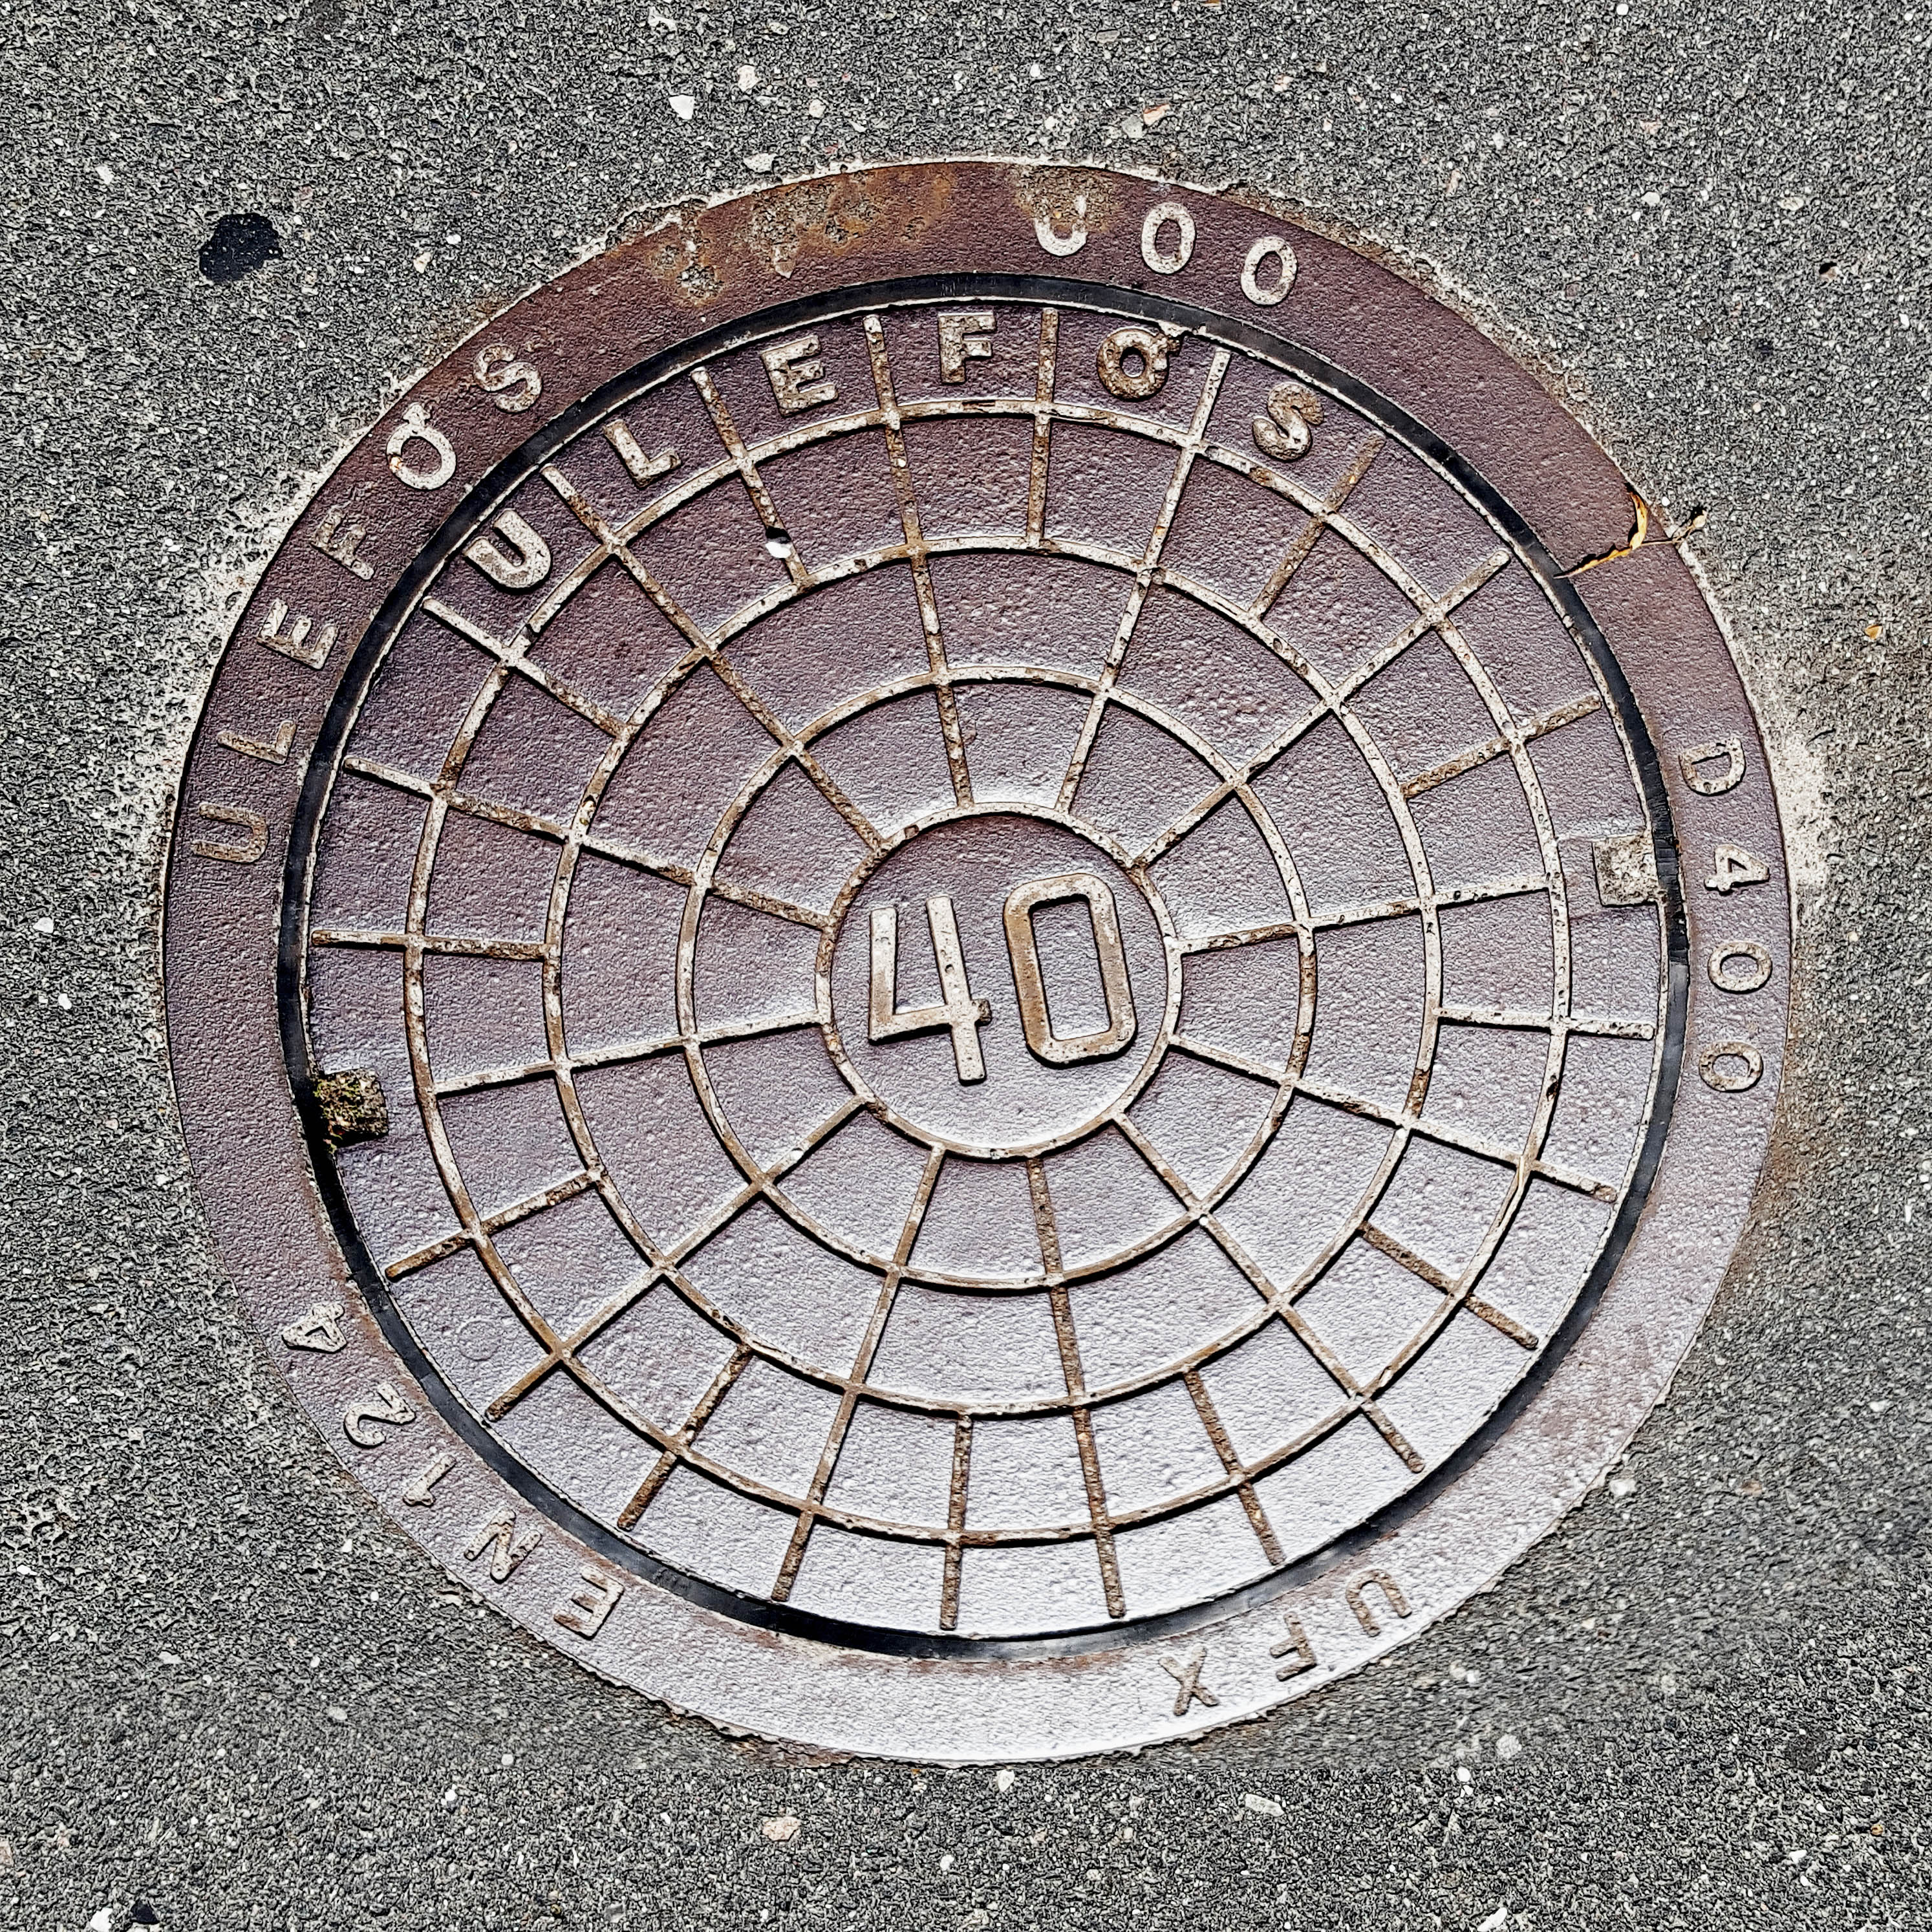 Manhole Cover, Frederiksvark Denmark - Cast iron surround inscribed with ULEFOS 000 0400 UFX EN124 - Inner, circular grid pattern